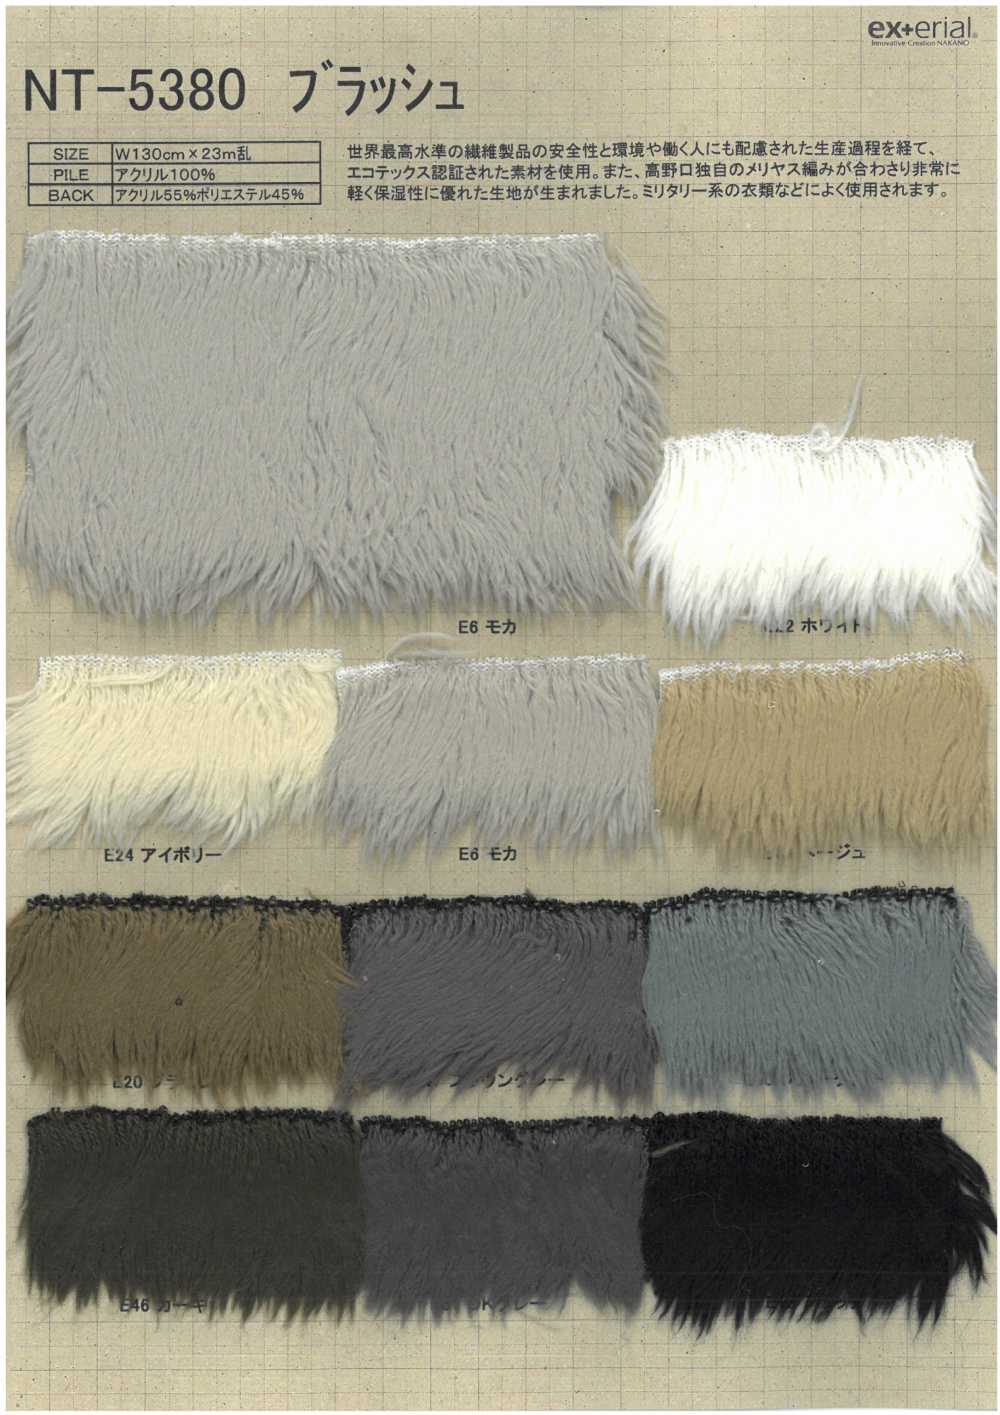 NT-5380 Craft Fur [Brush][Textile / Fabric] Nakano Stockinette Industry